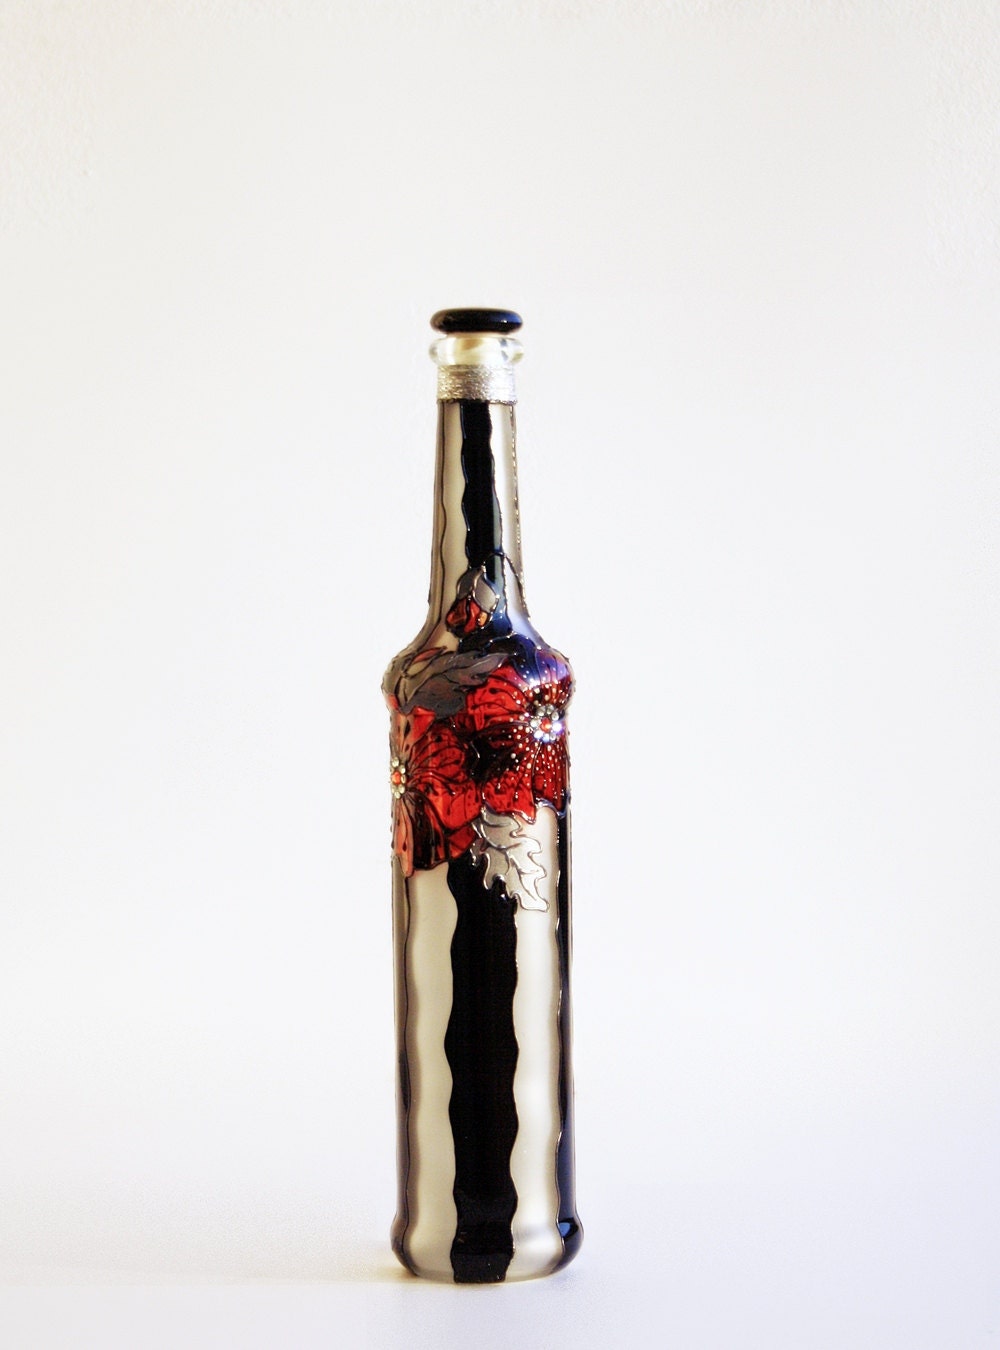 Hand Painted Bottle Matt Glass Upcycled Red Poppy Black Stripes Swarovski crystals - NevenaArtGlass